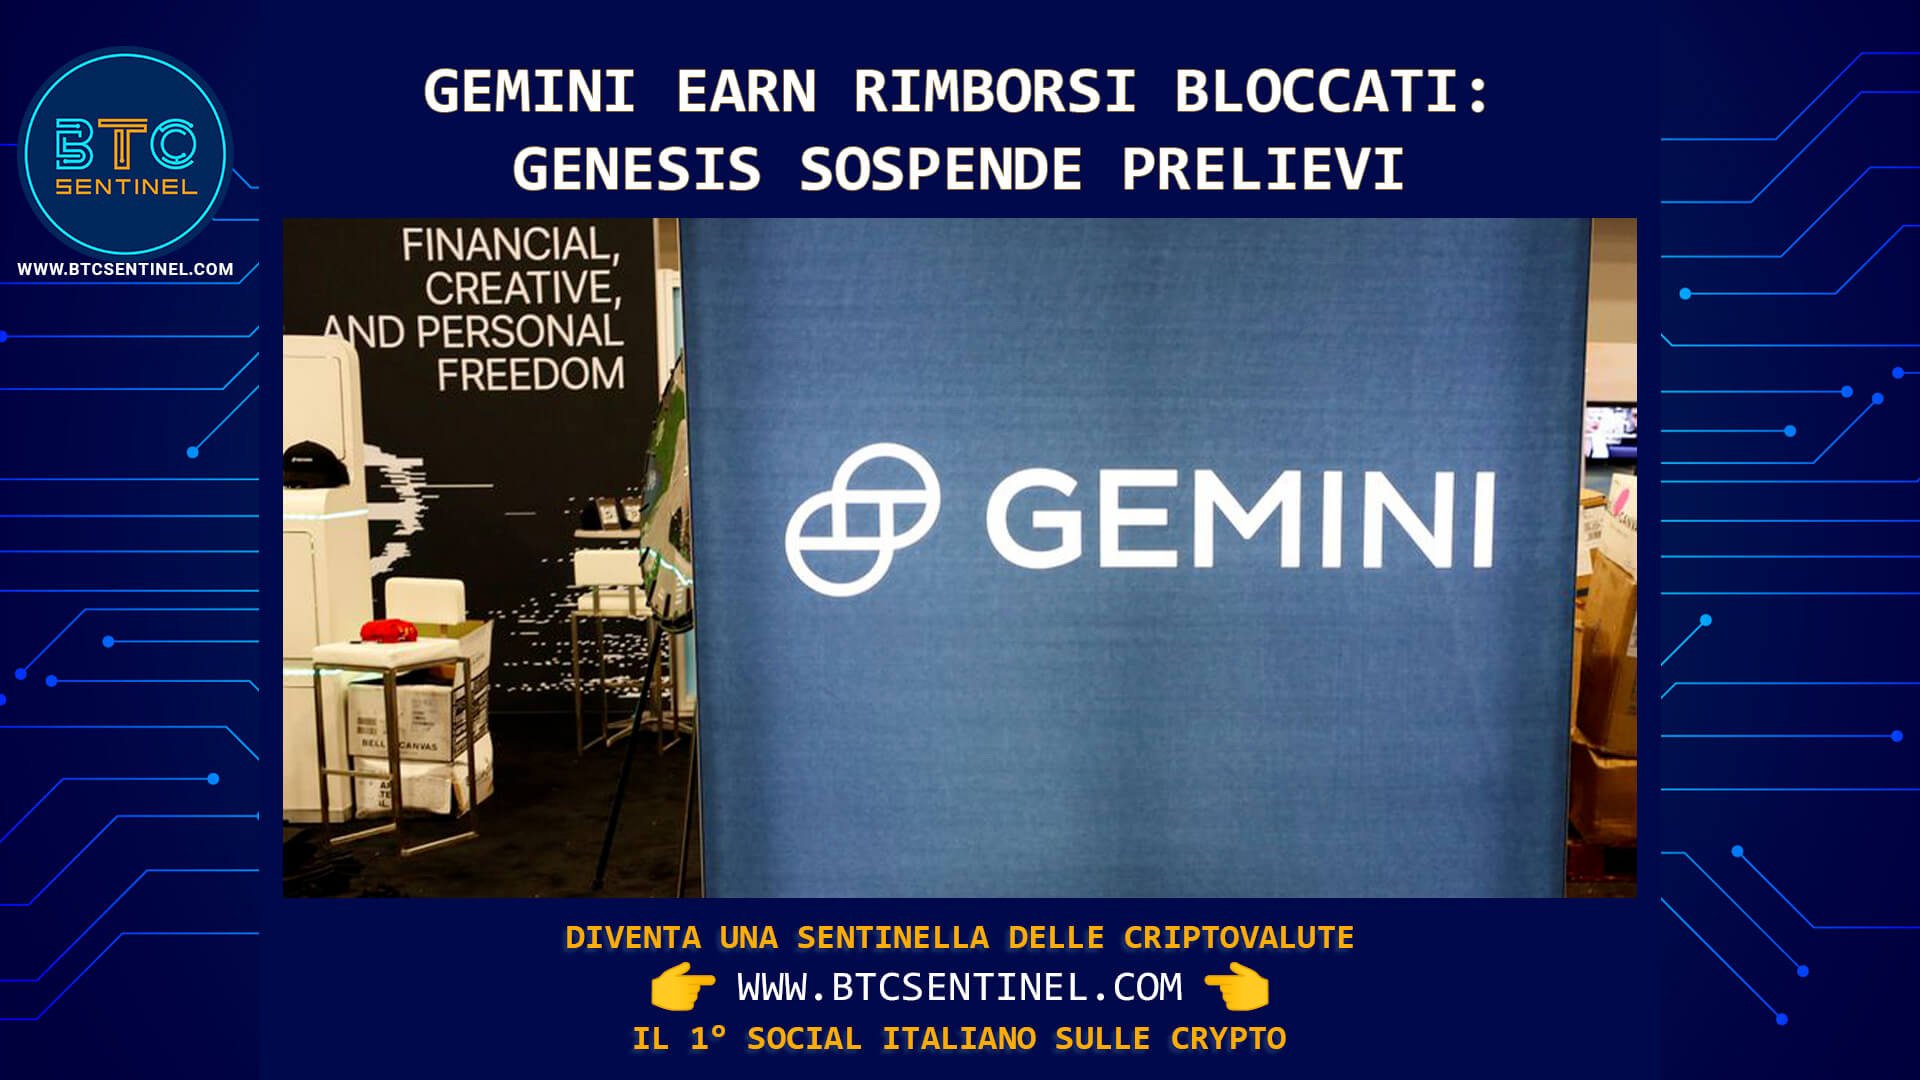 Gemini Earn rimborsi bloccati: Genesis sospende prelievi